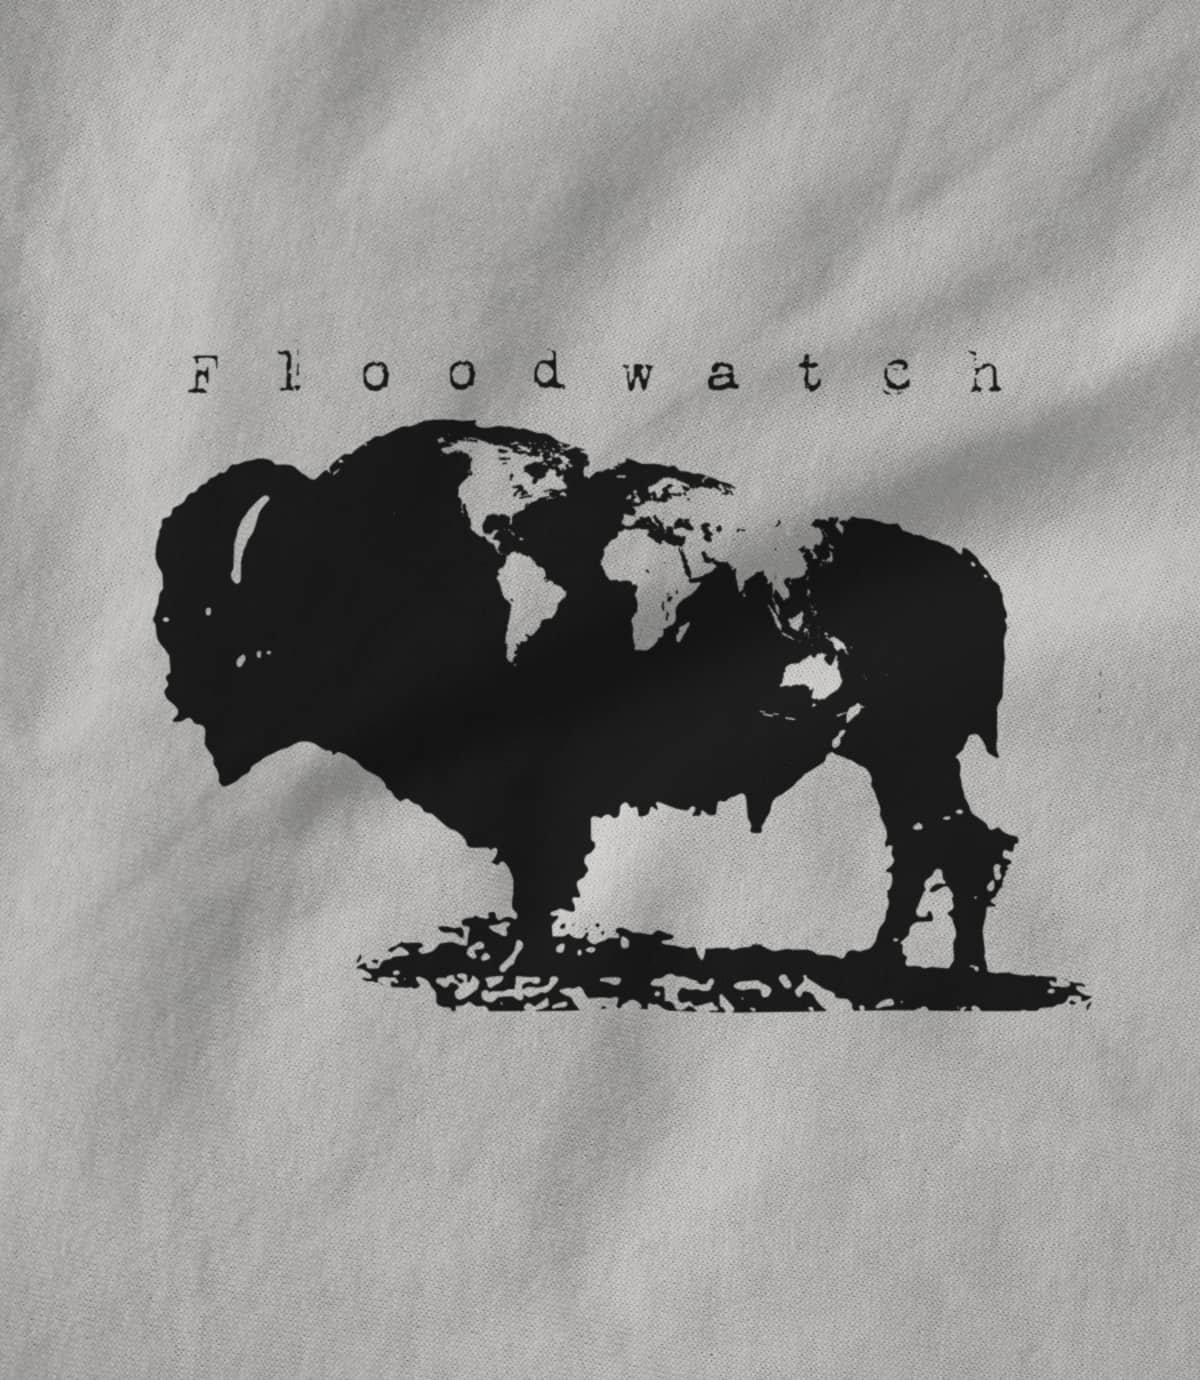 Floodwatch